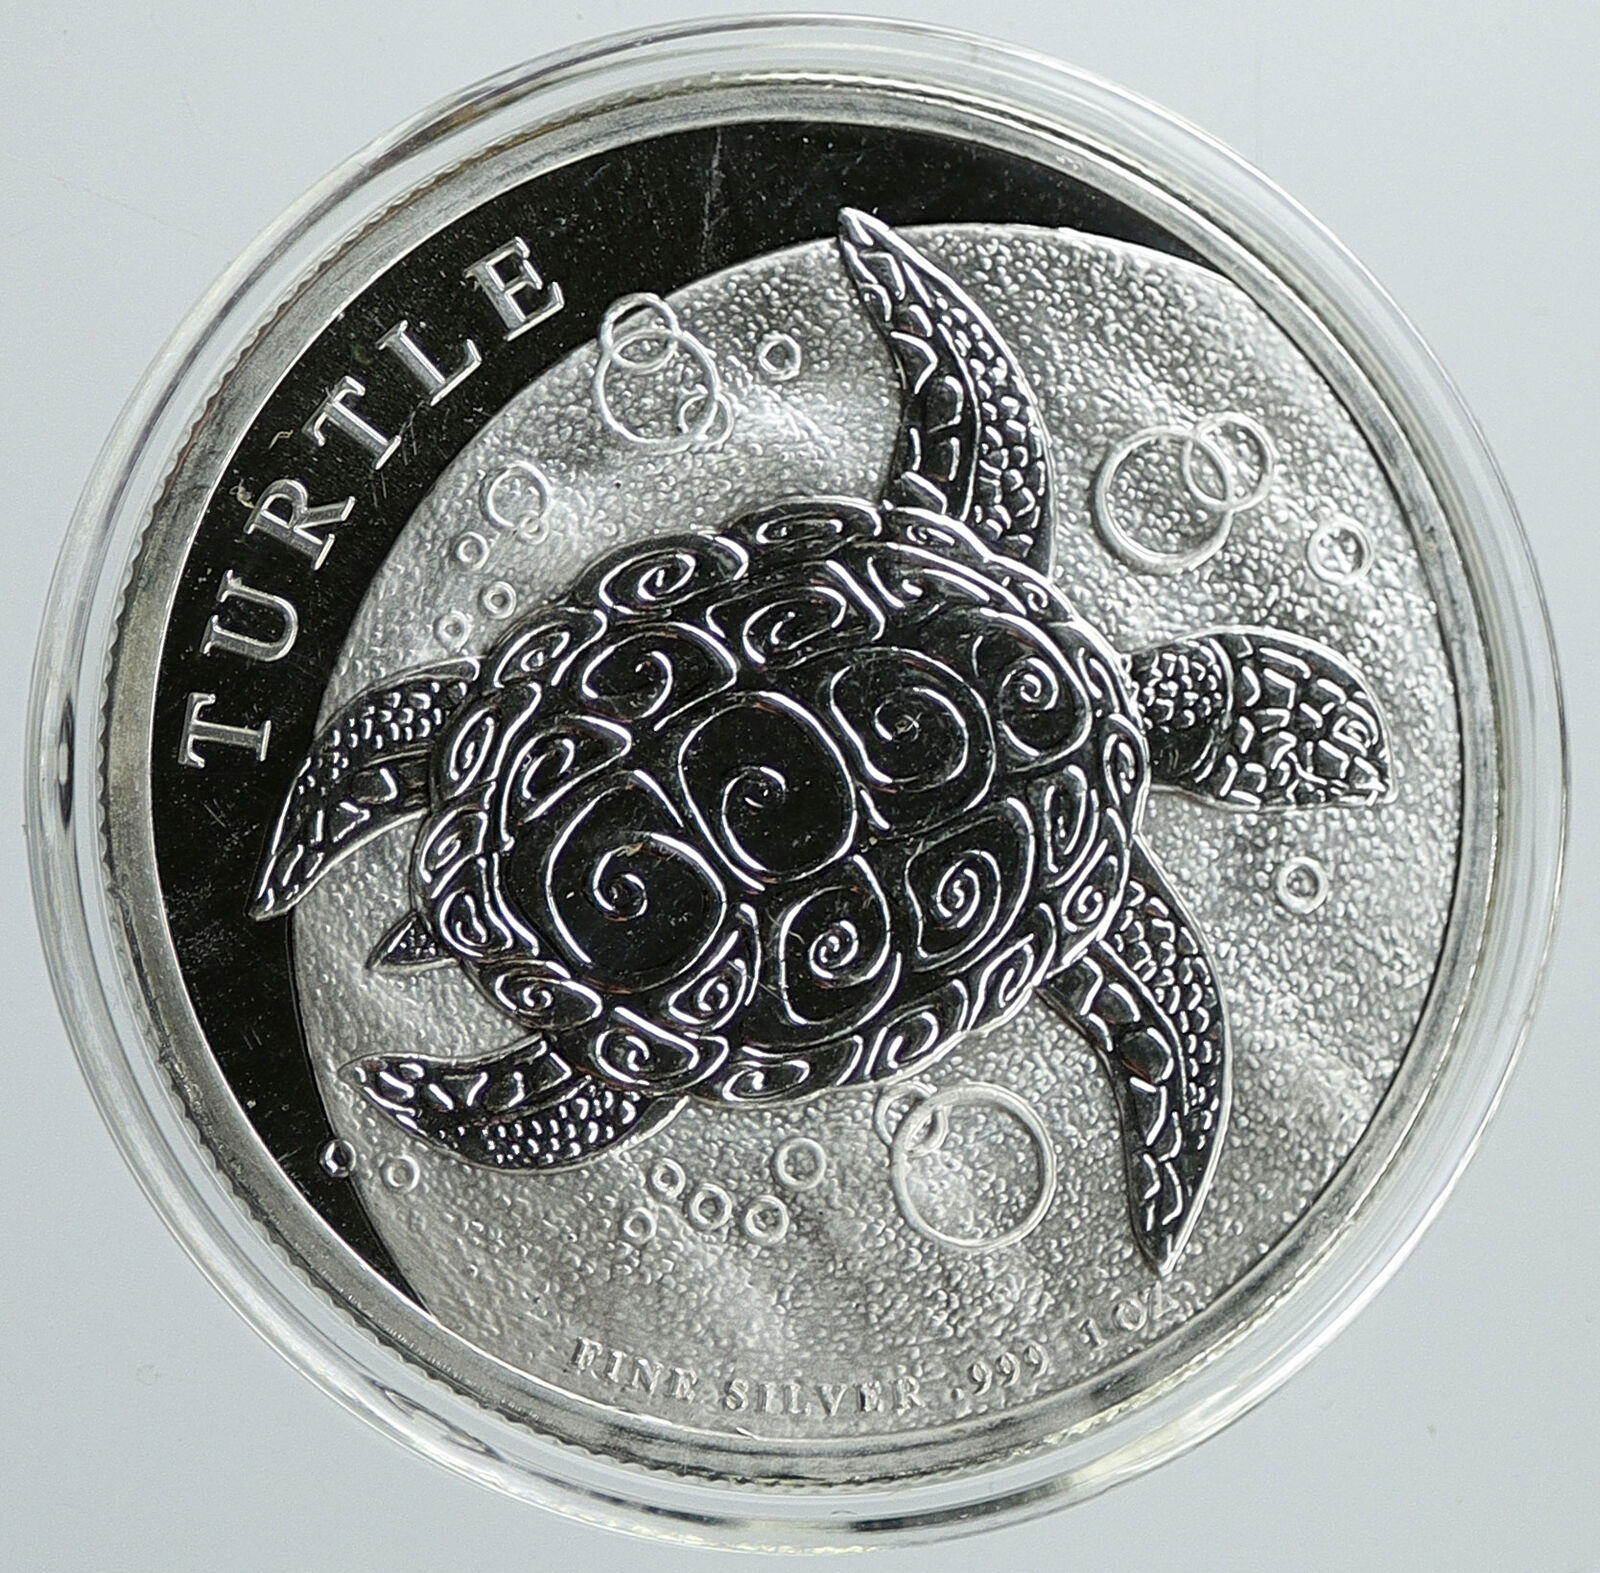 2014 NIUE UK Queen Elizabeth II NATURE Hawksbill Turtle Silver $2 Coin i116511